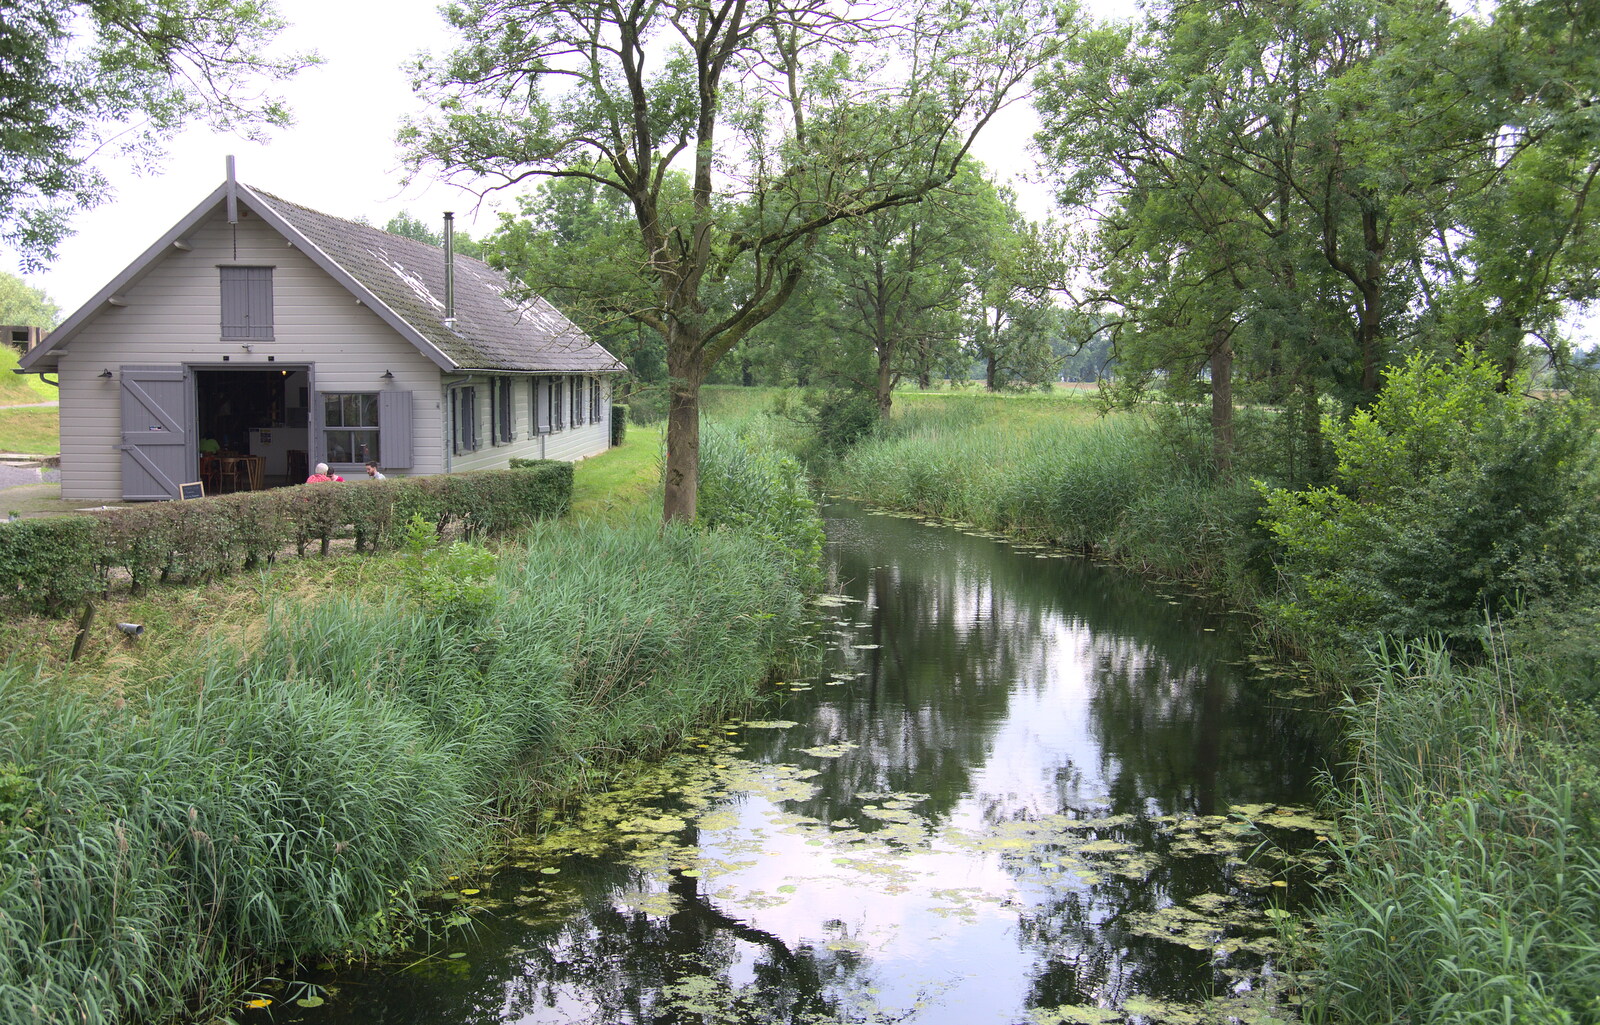 A backwater of the Linge, by the KunstFort from A Postcard From Asperen, Gelderland, Netherlands - 9th June 2018